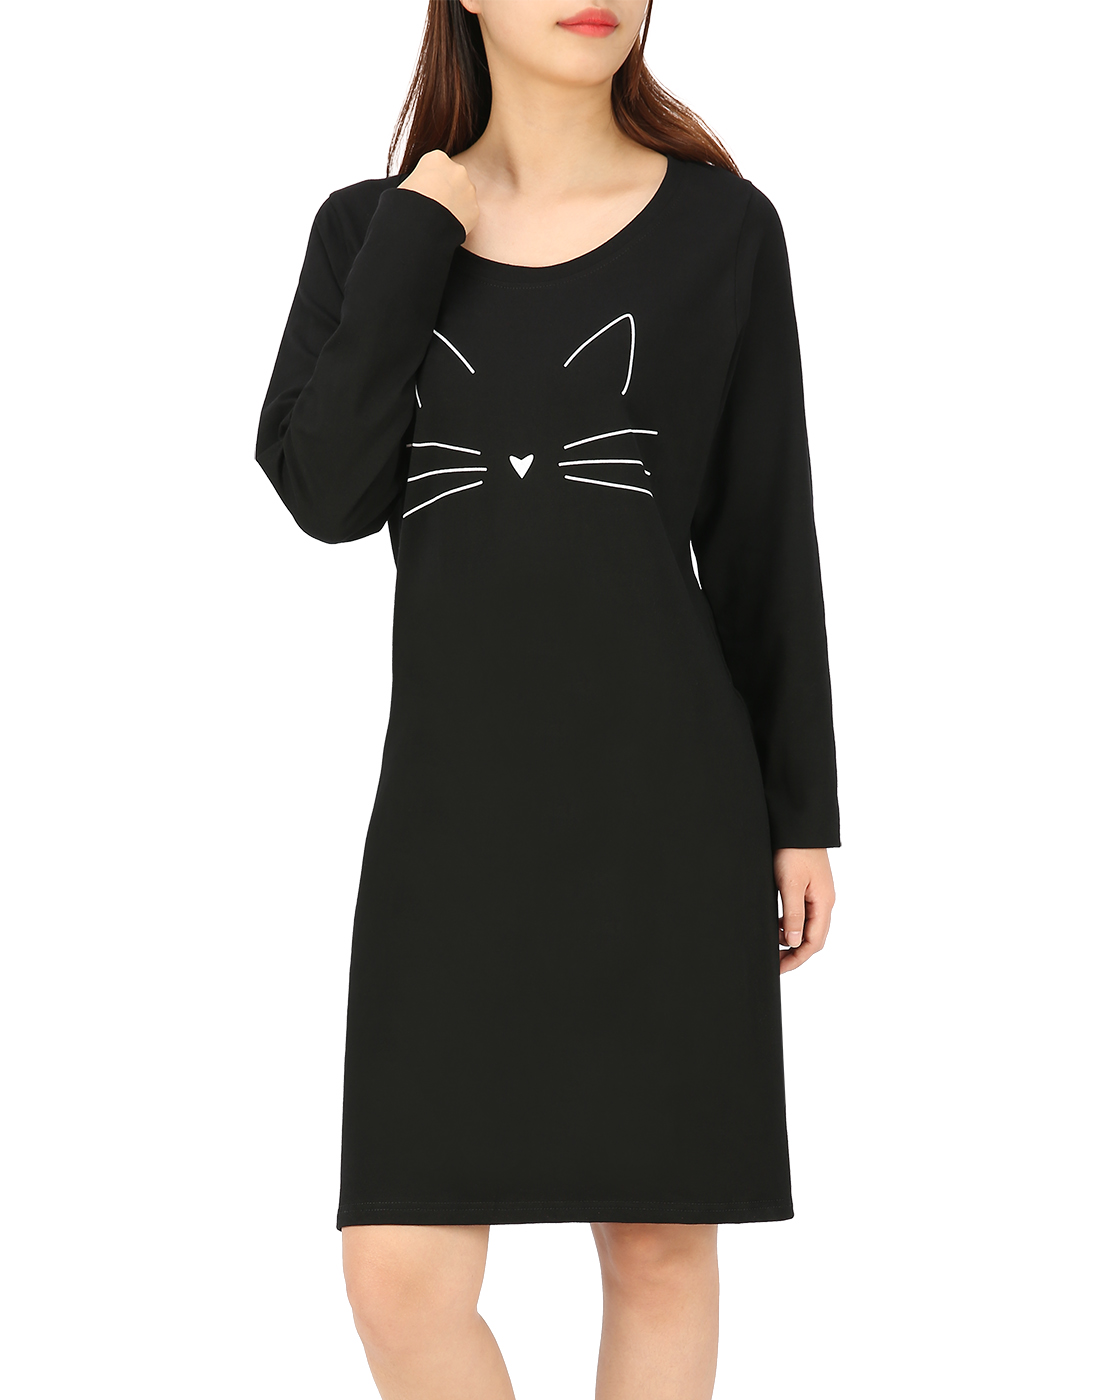 HDE Women's Cotton Nightgowns Short Sleeve Sleep Dress Need More Sleep  Large-X-Large 